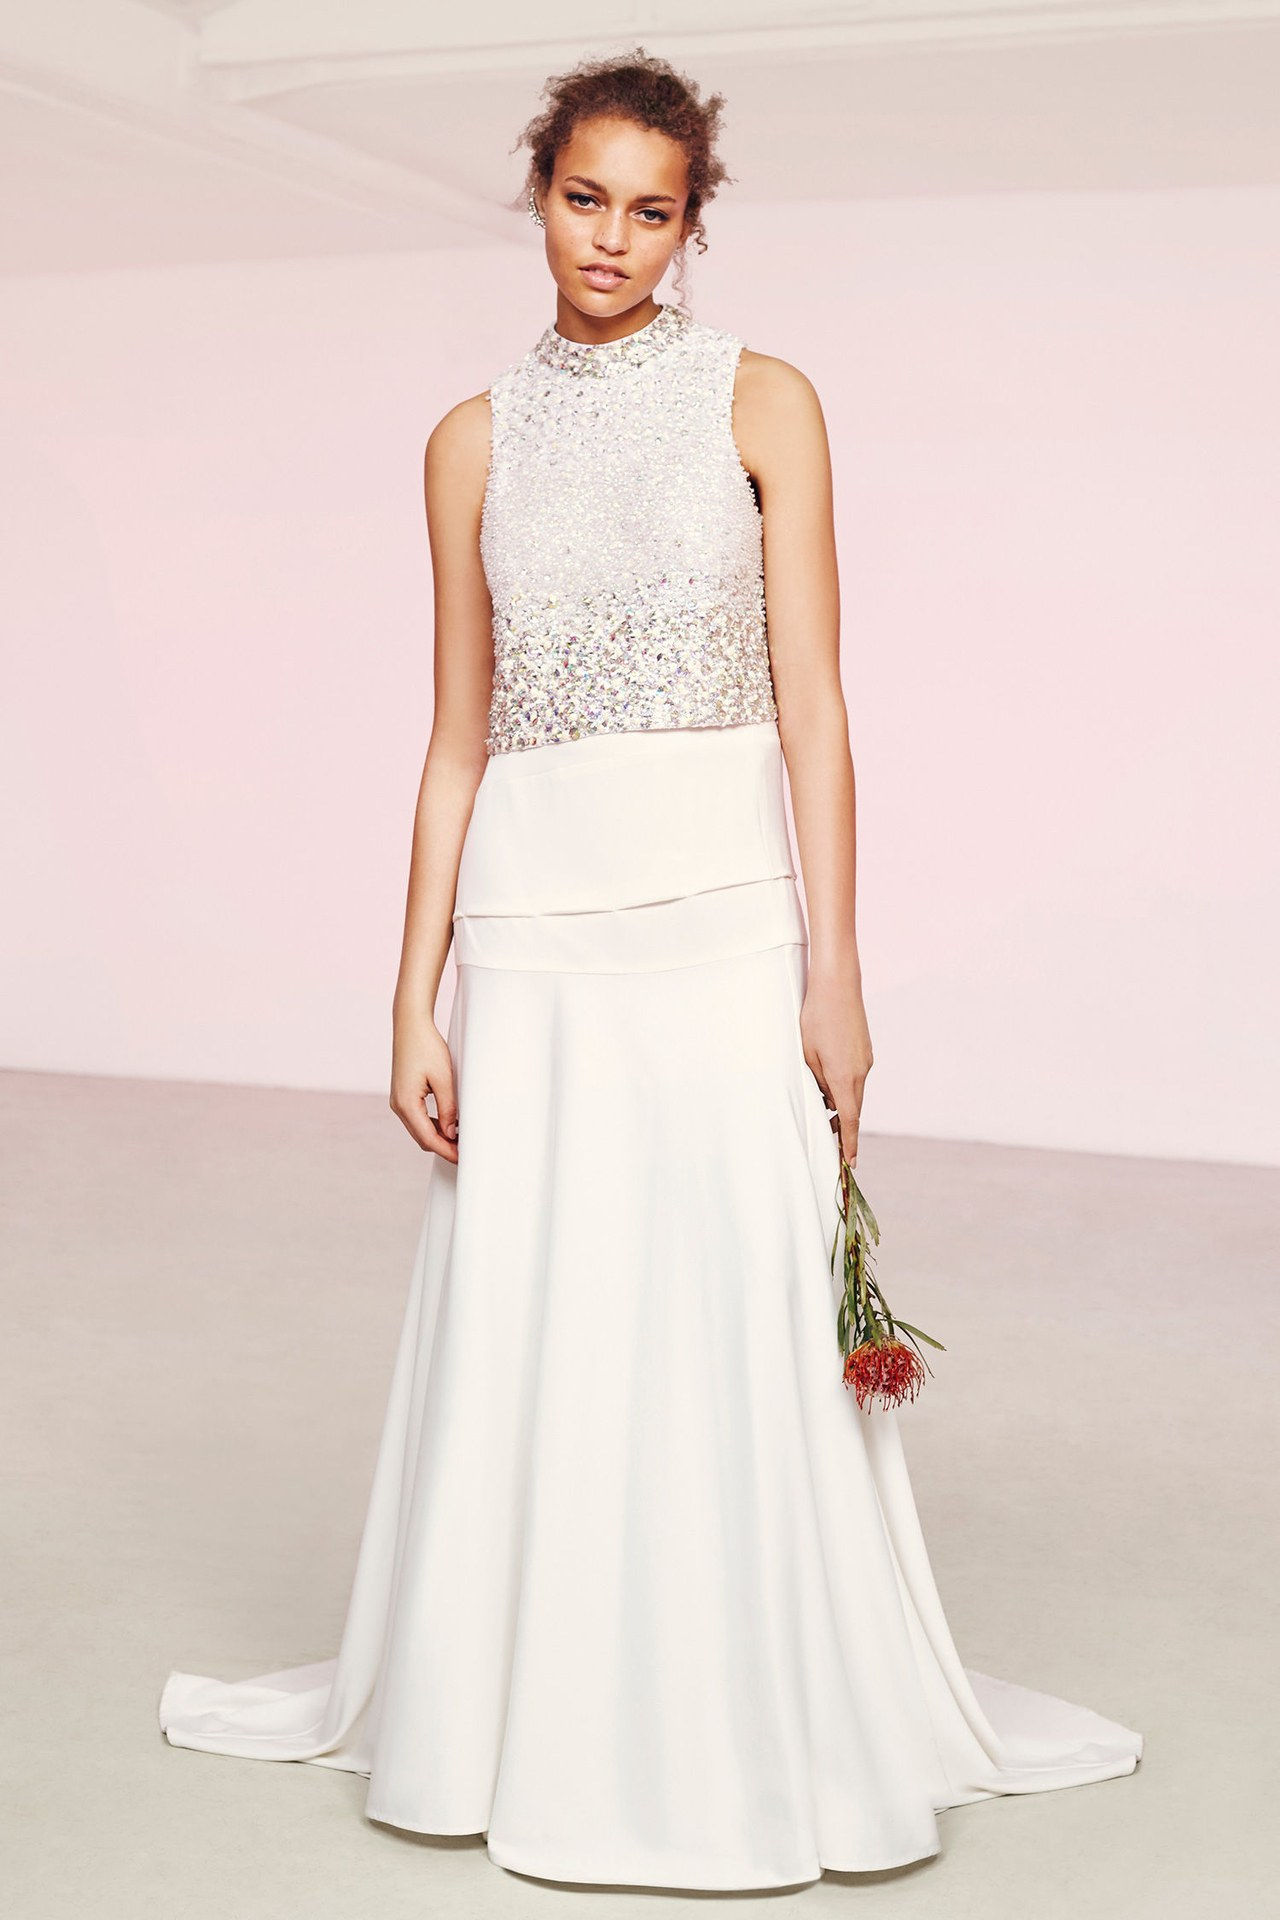 Asos bridal wedding dresses sparkly top long skirt